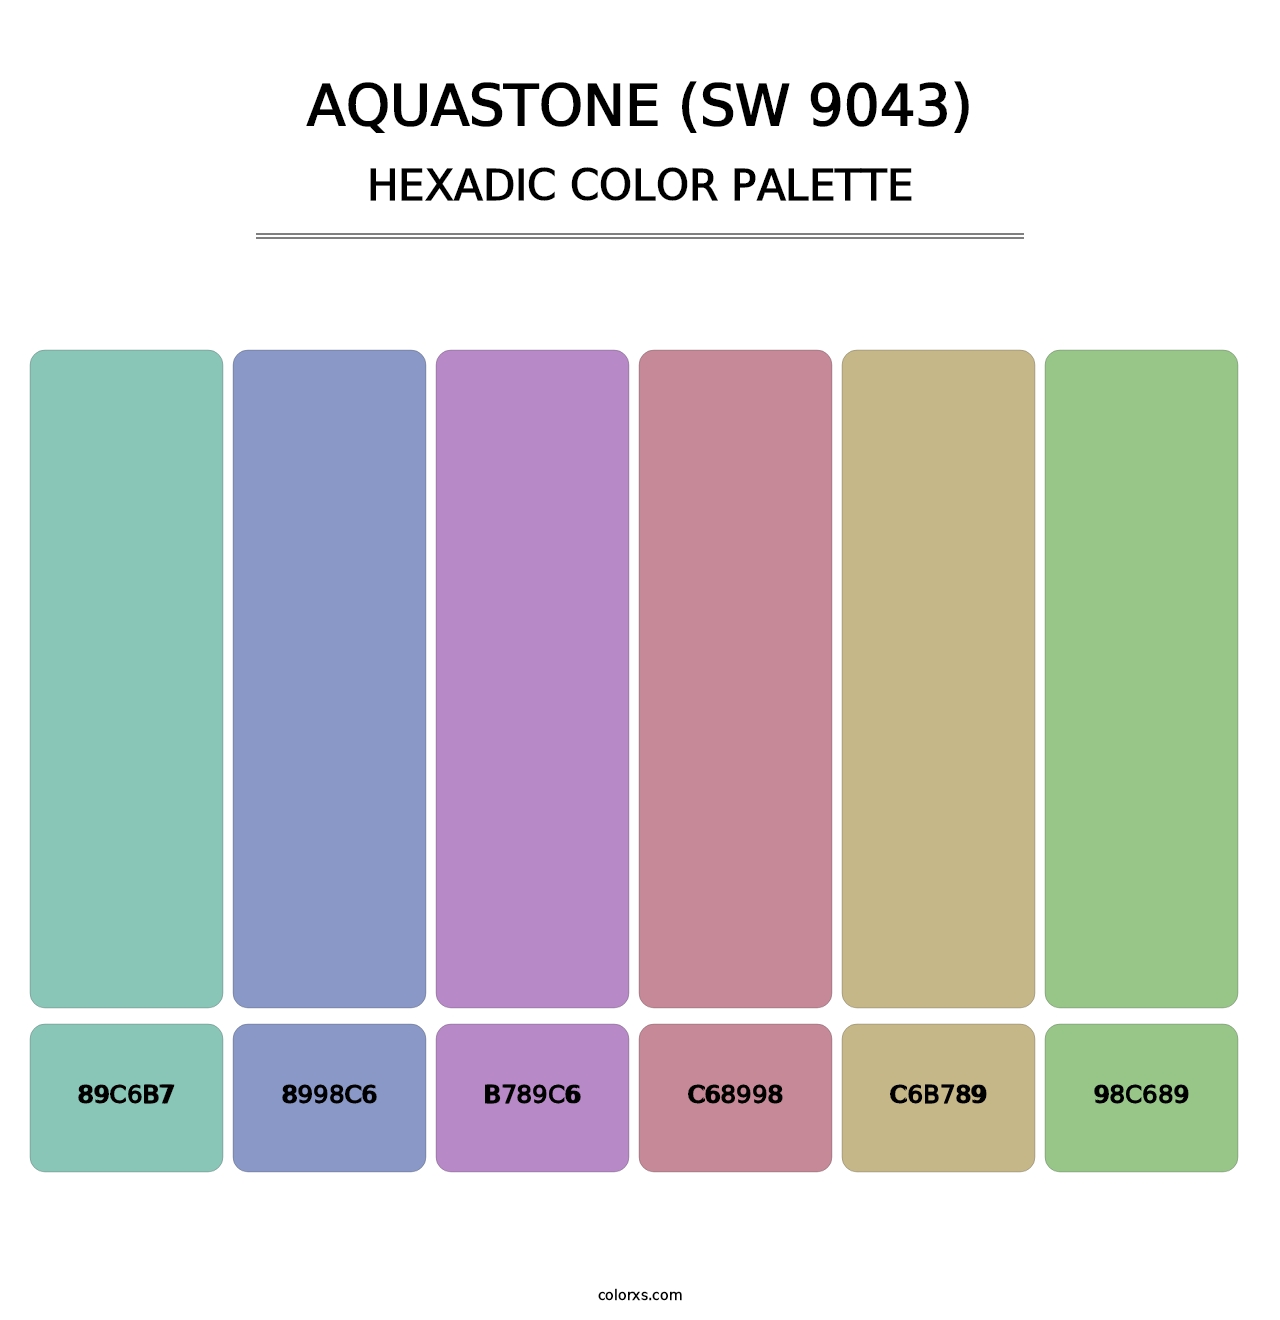 Aquastone (SW 9043) - Hexadic Color Palette